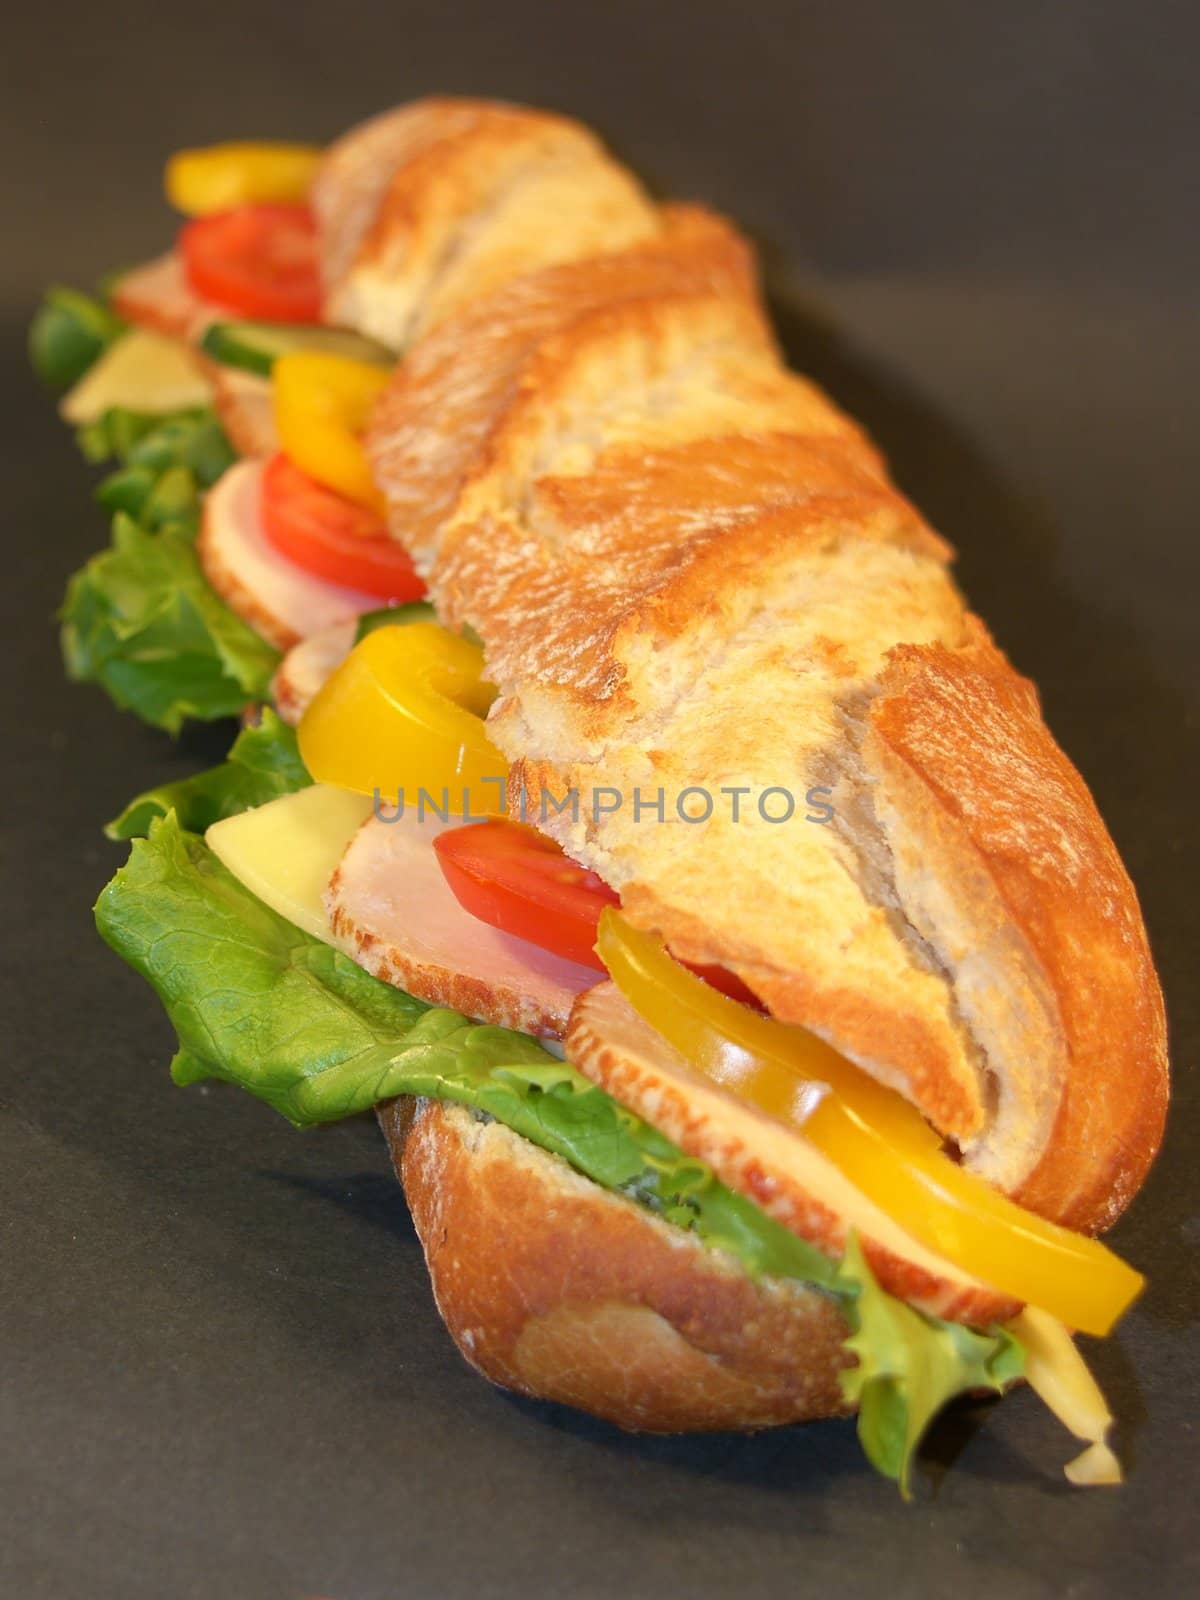 Big Sandwich by peromarketing